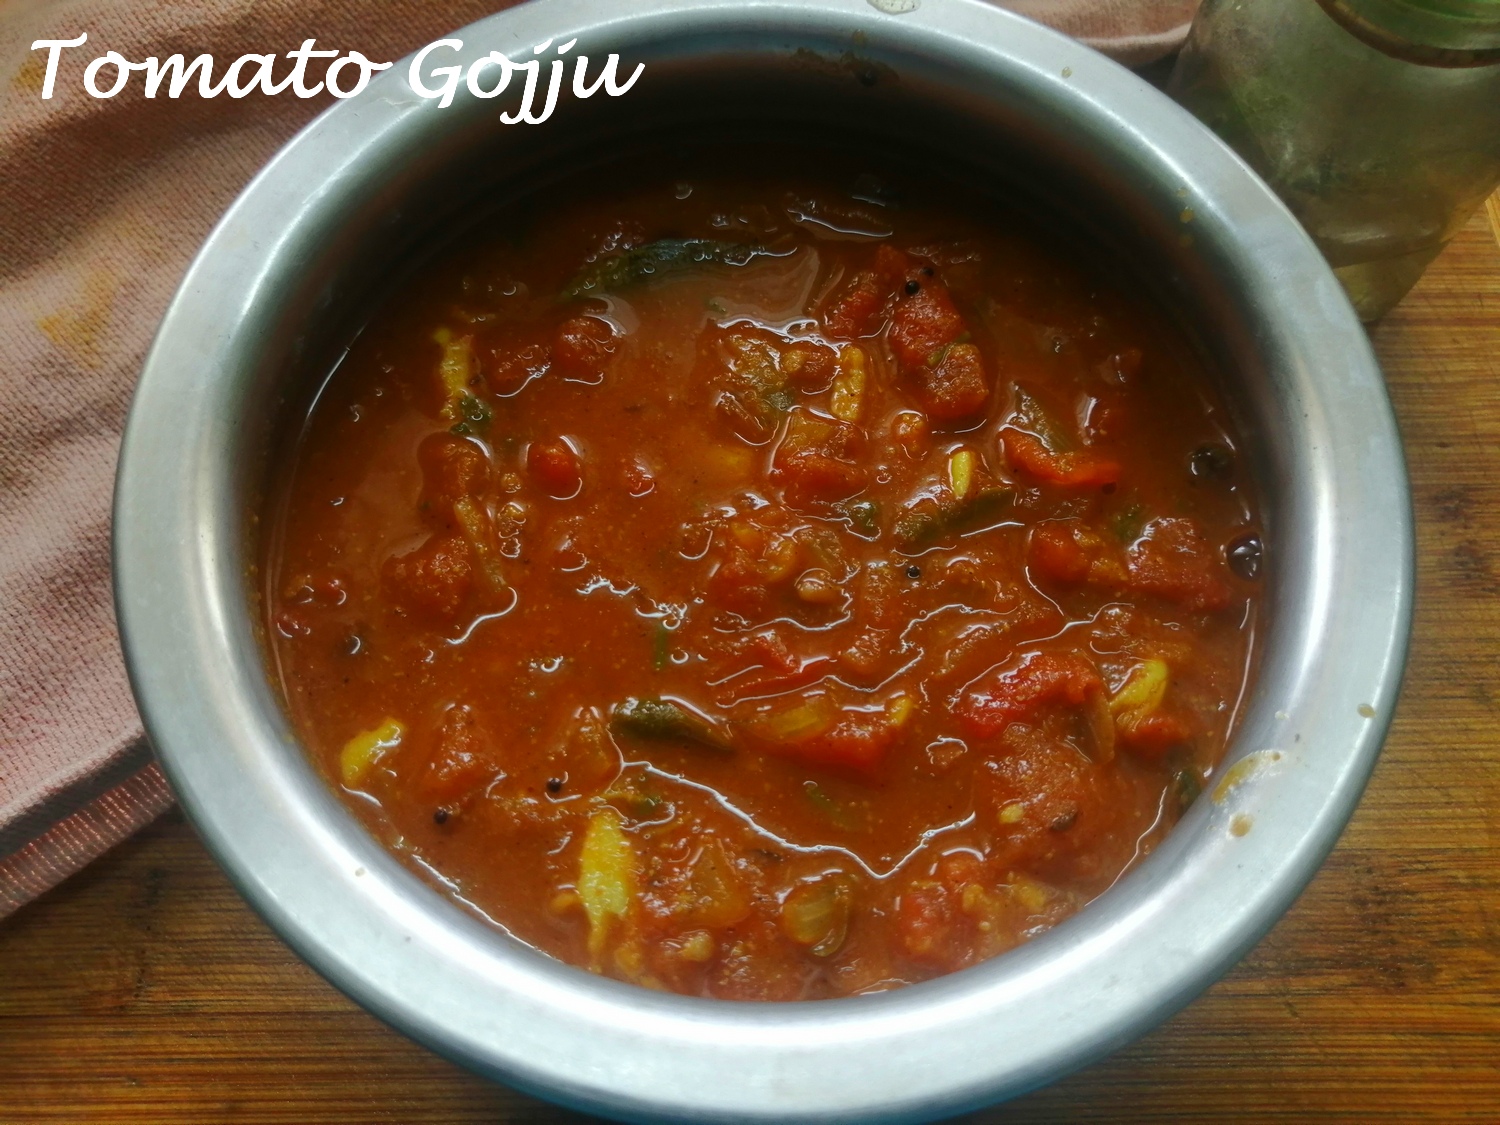 Tomato Gojju or Gravy